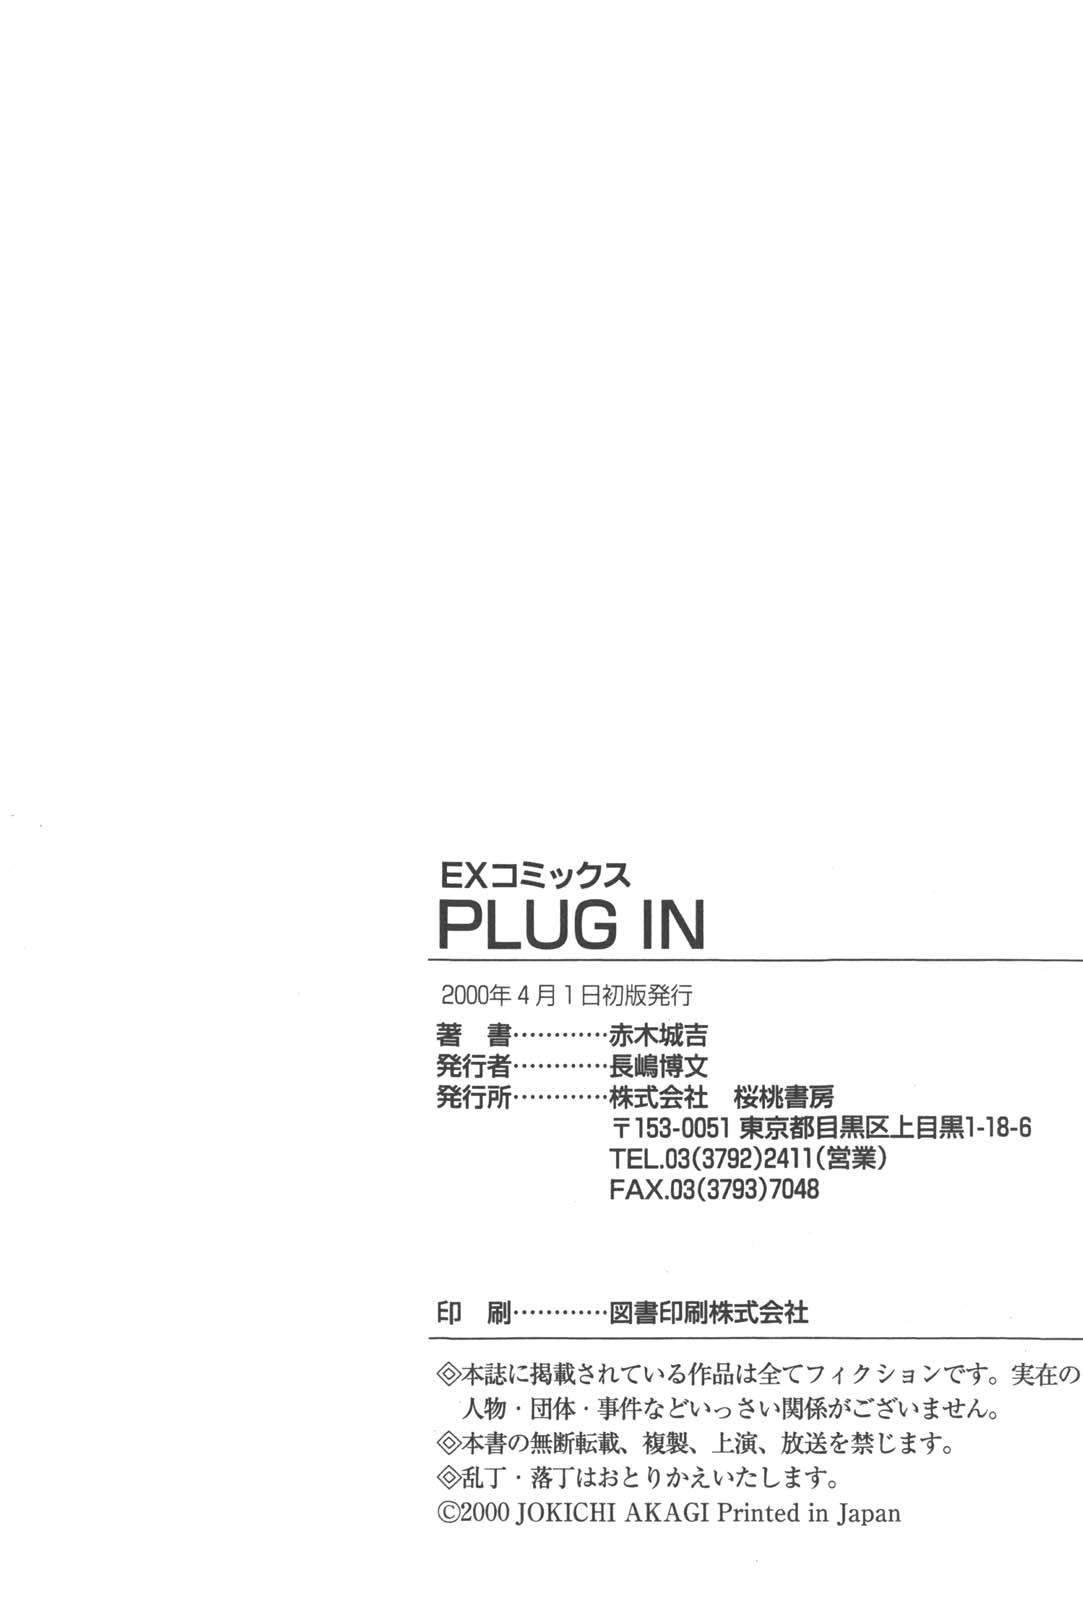 Akagi Joukichi - Plug In 